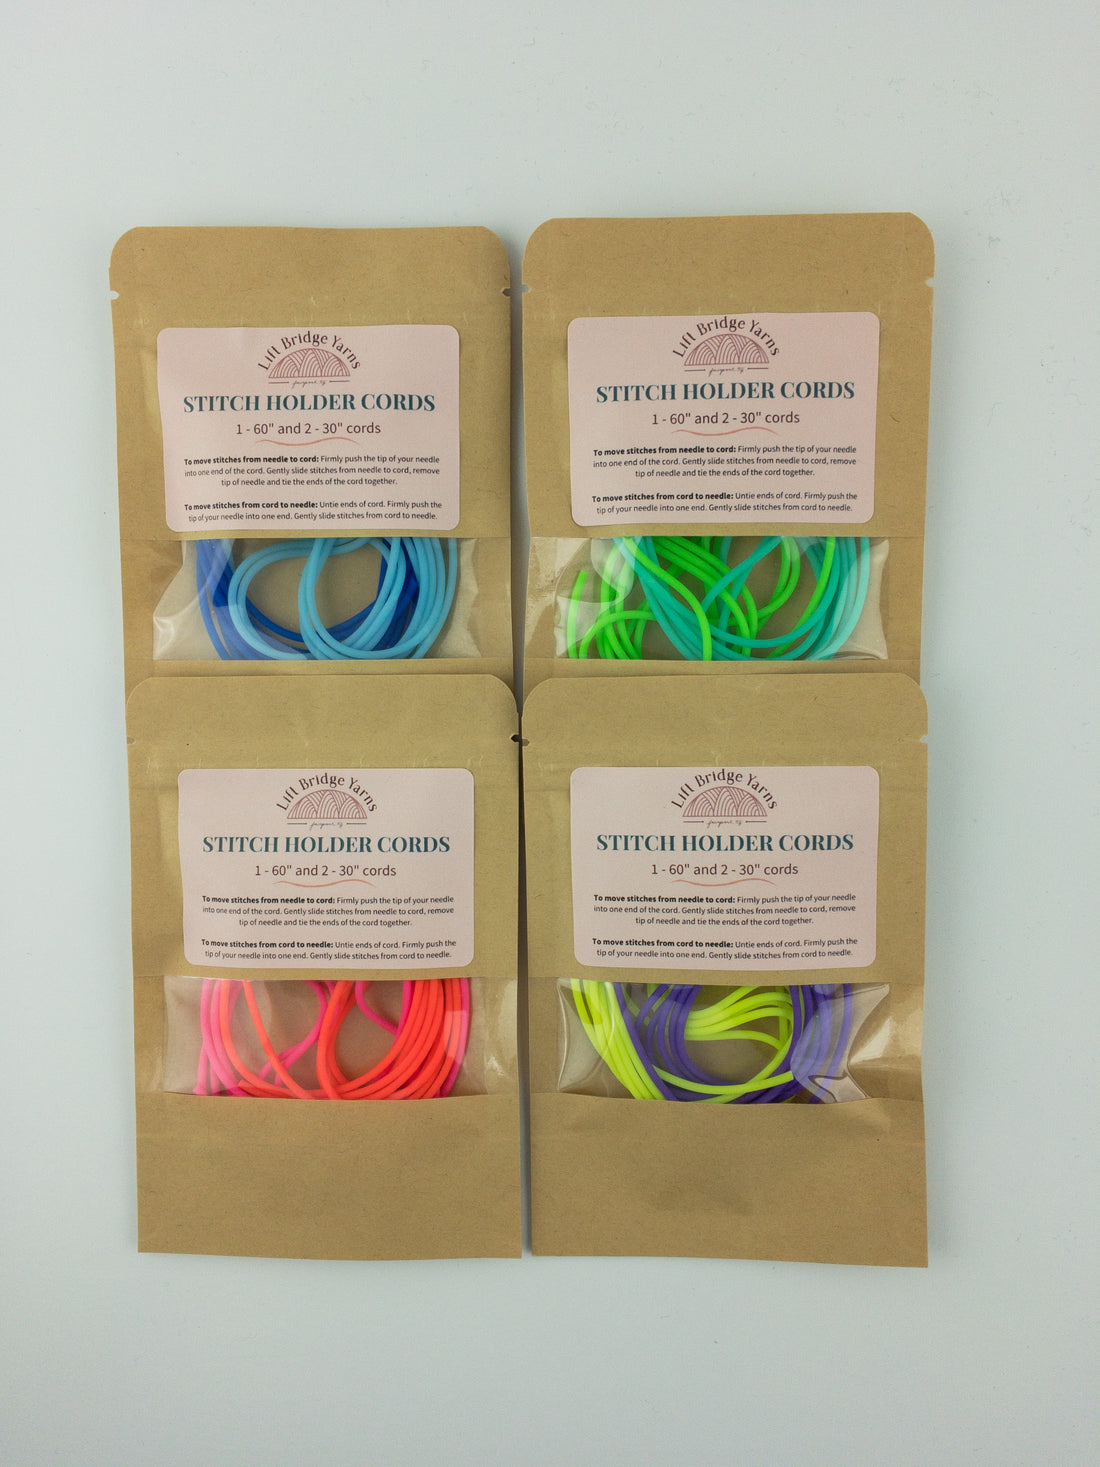  lift bridge yarn products: stitch holder cords